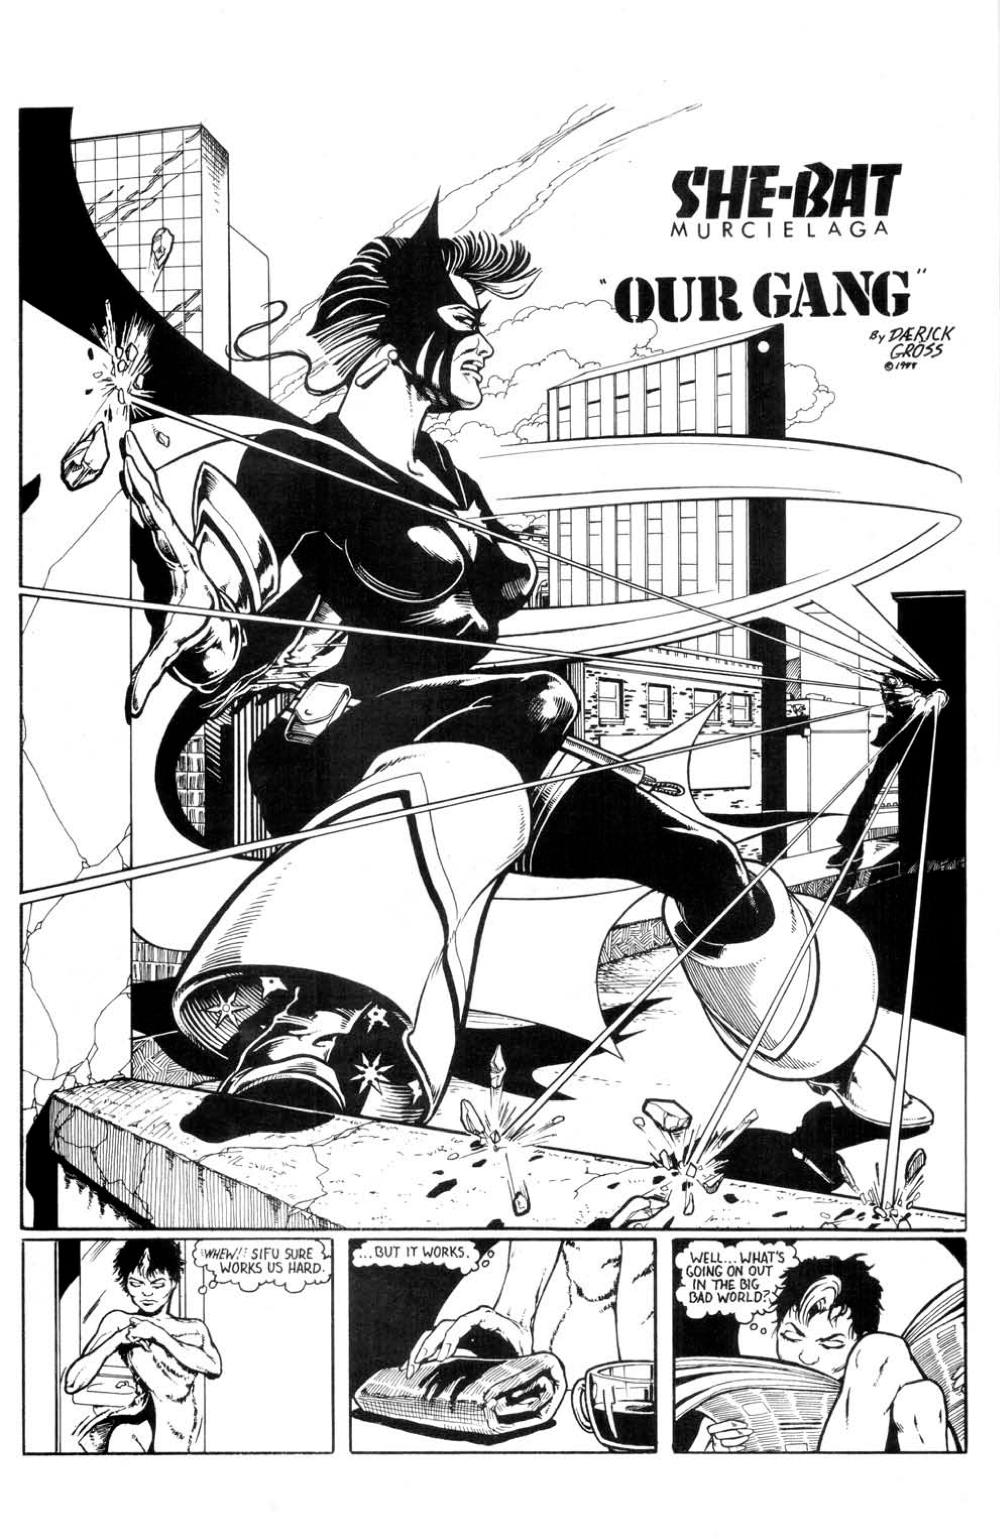 Read online Murciélaga She-Bat comic -  Issue #1 - 3